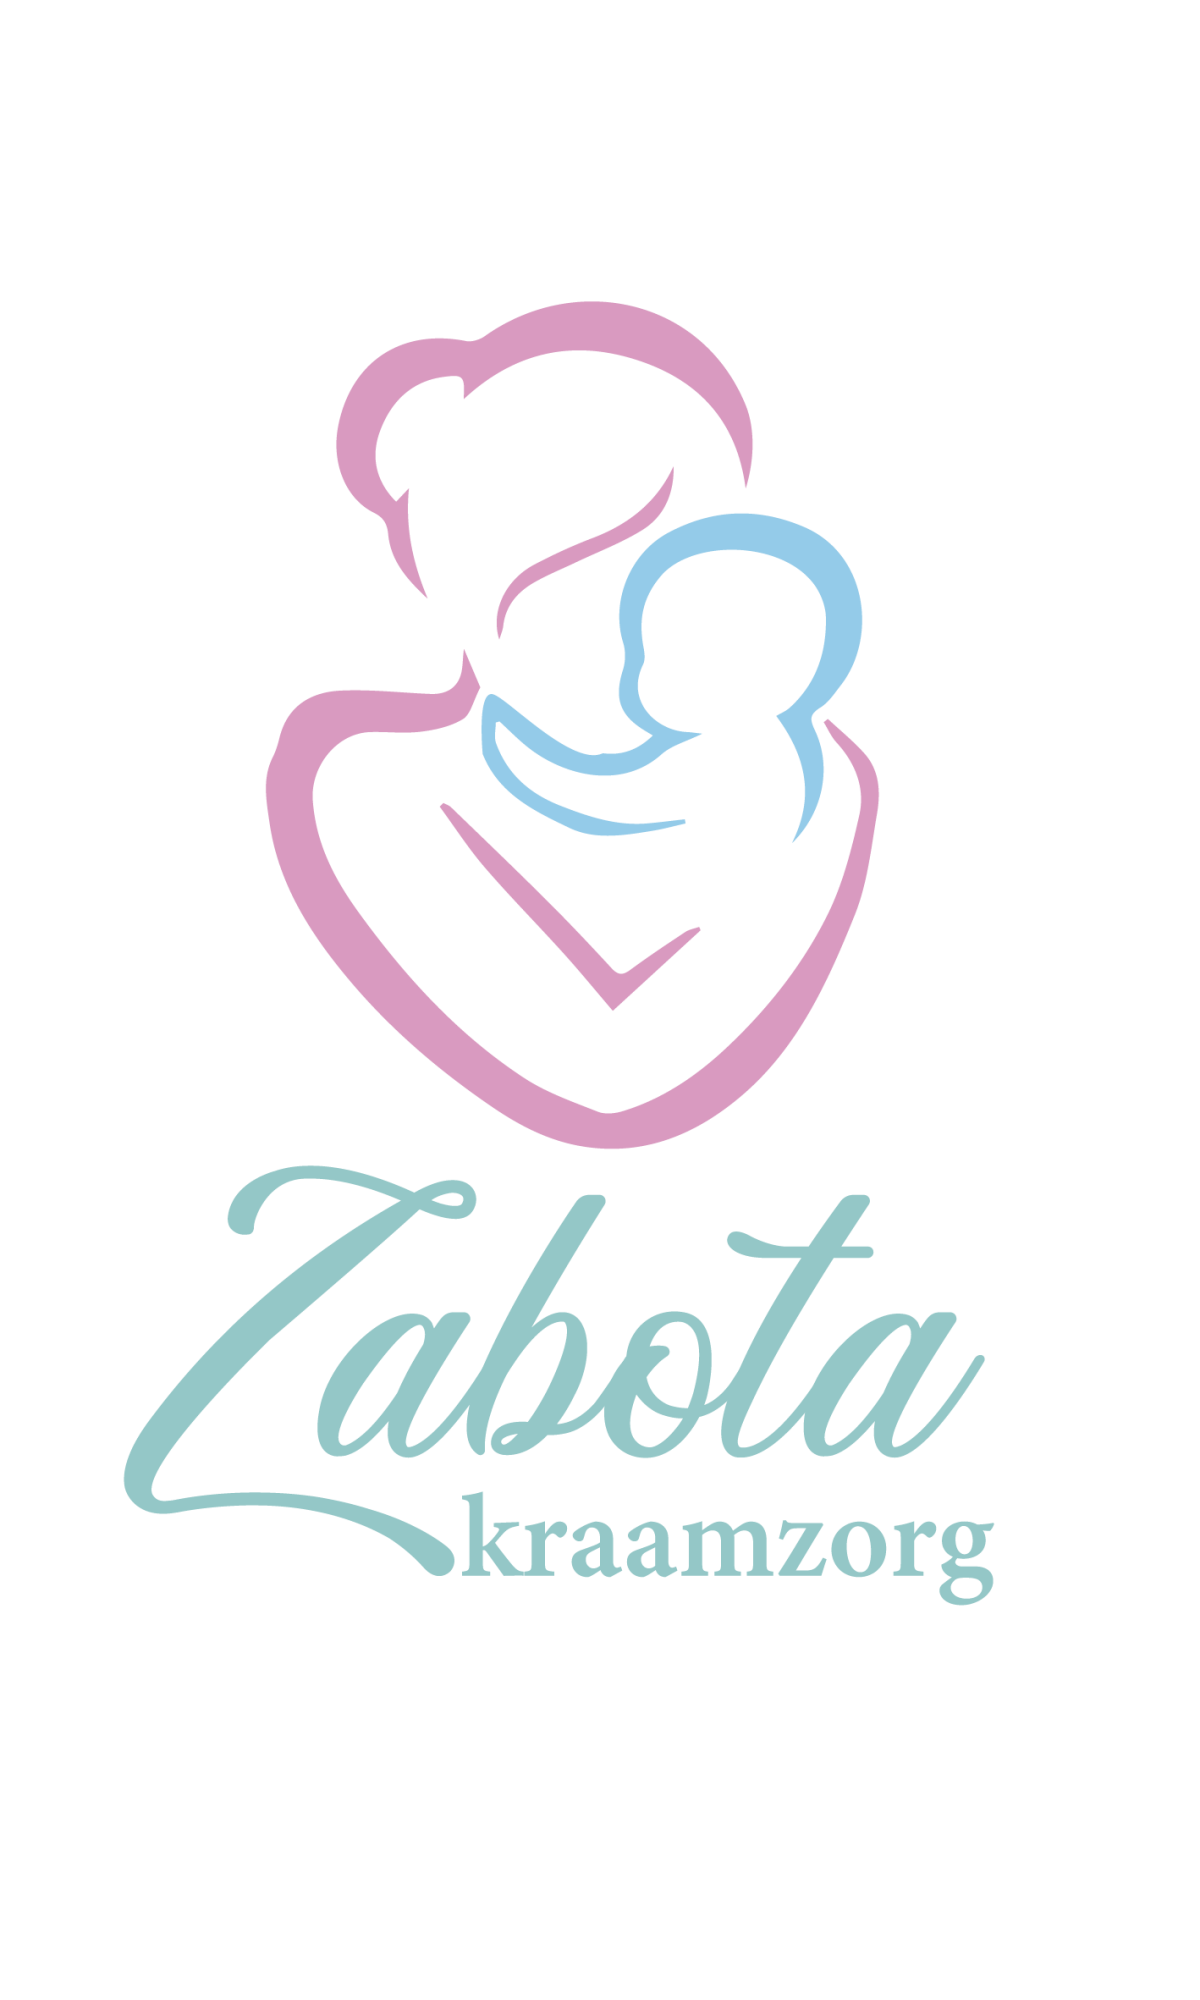 Zabota kraamzorg logo